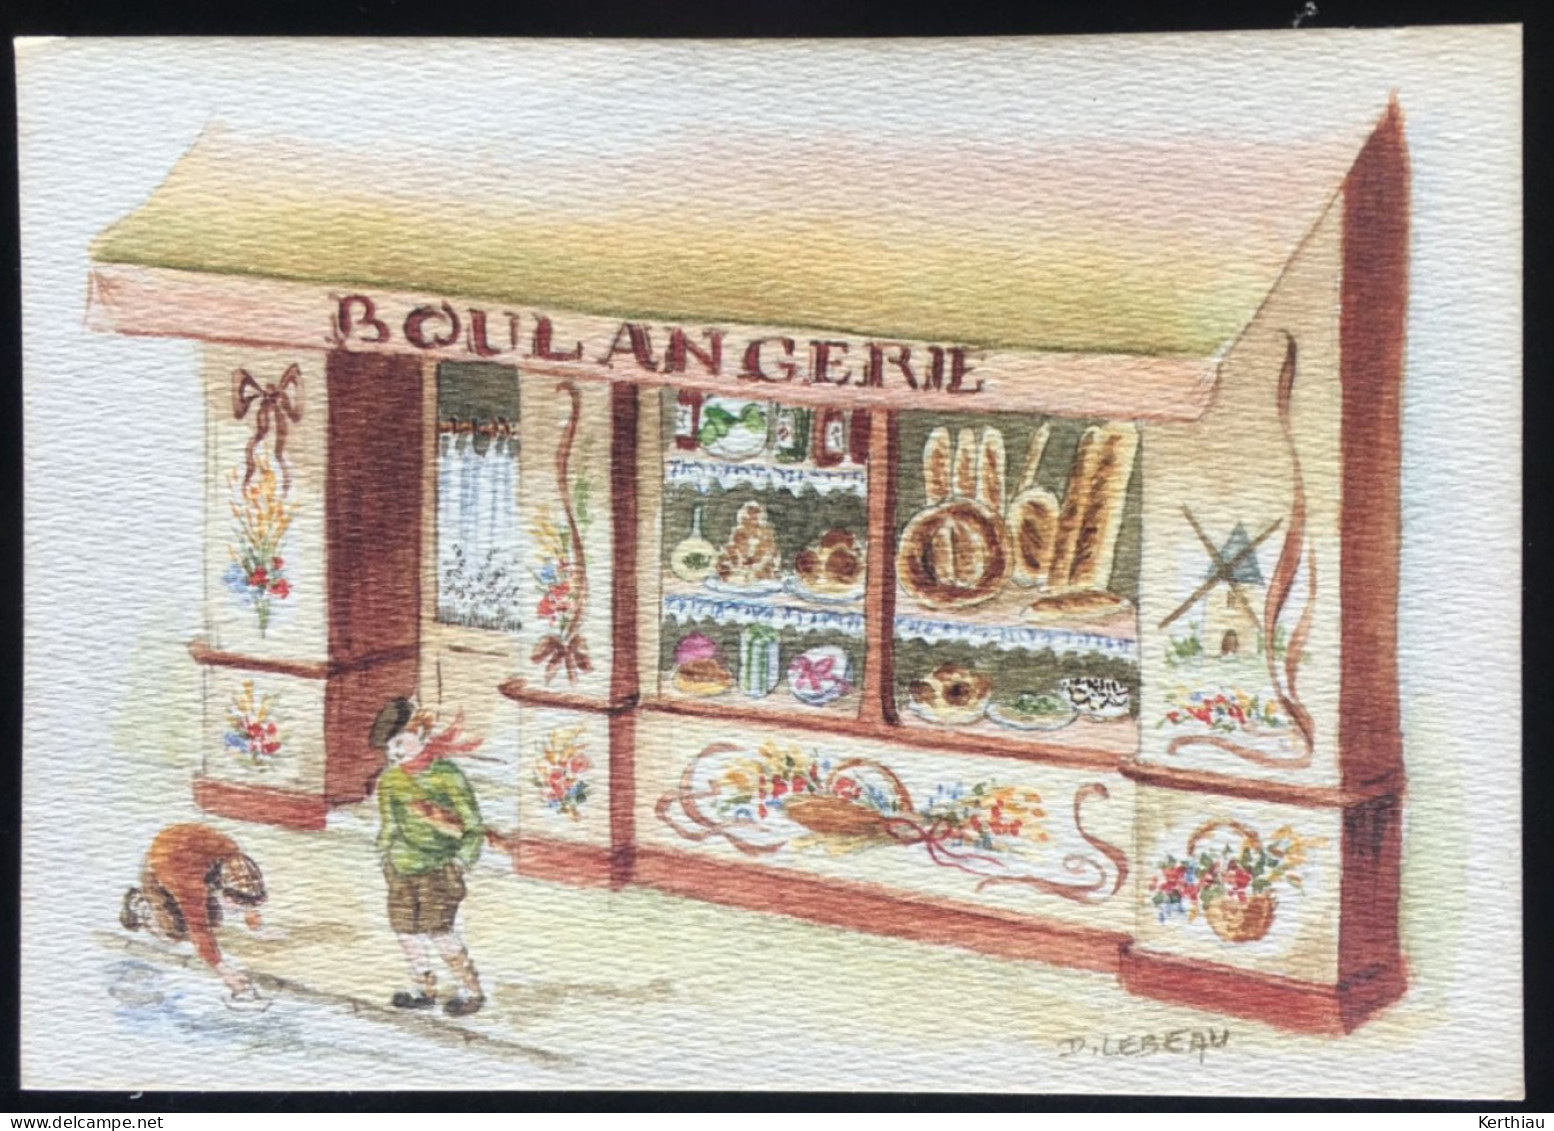 10 cartes 10 x 15 aquarelles de D. Lebeau, dix commerces différents. Non circulées